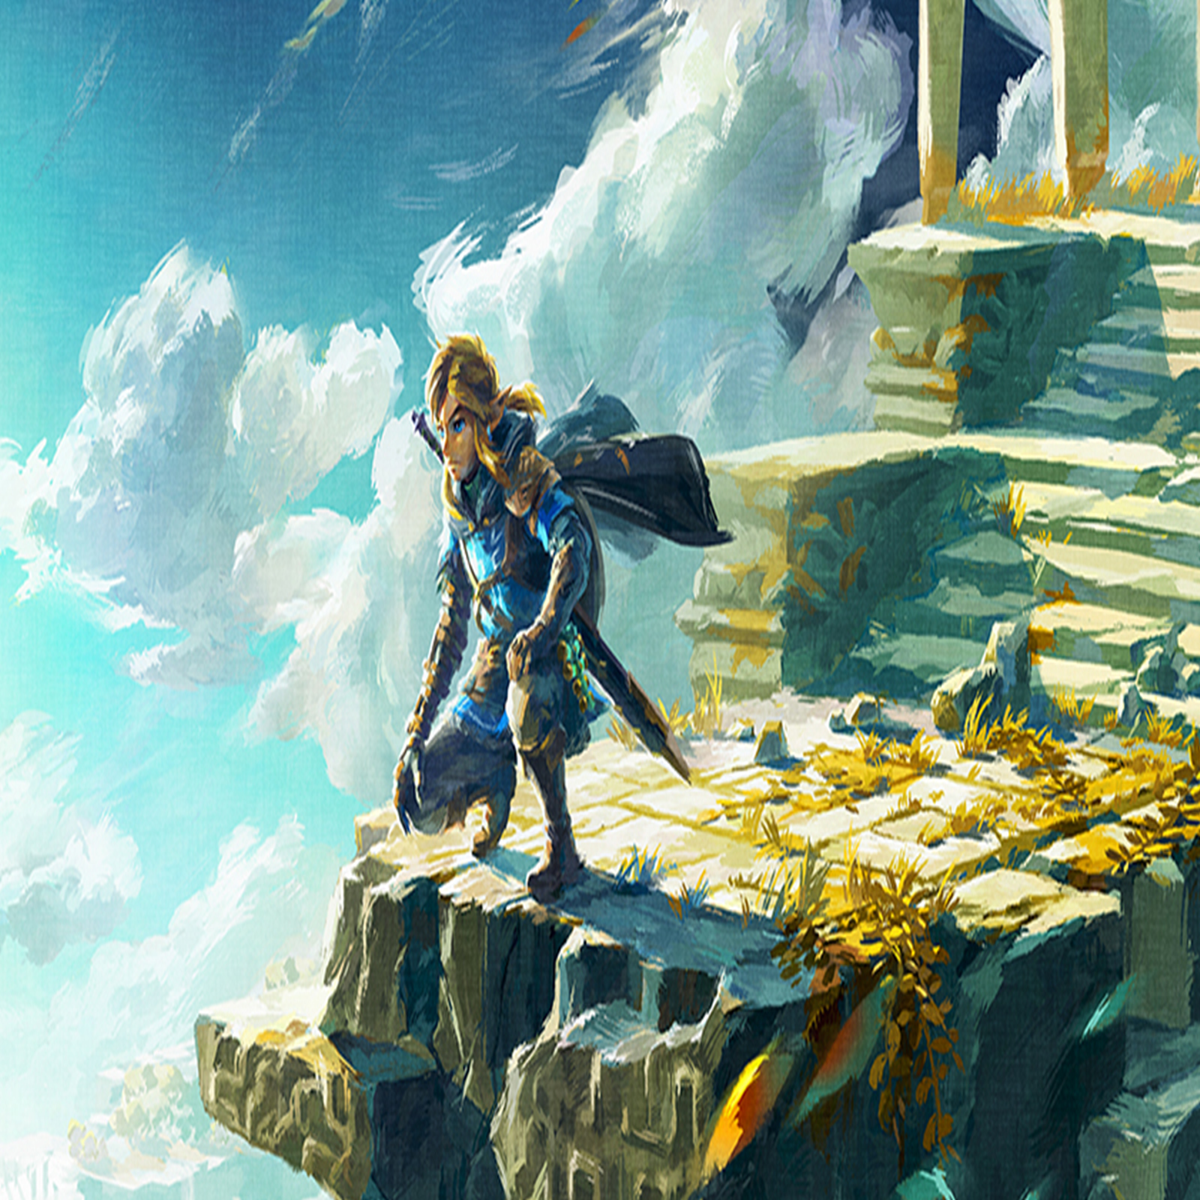 The Legend of Zelda: Tears of the Kingdom (2023)